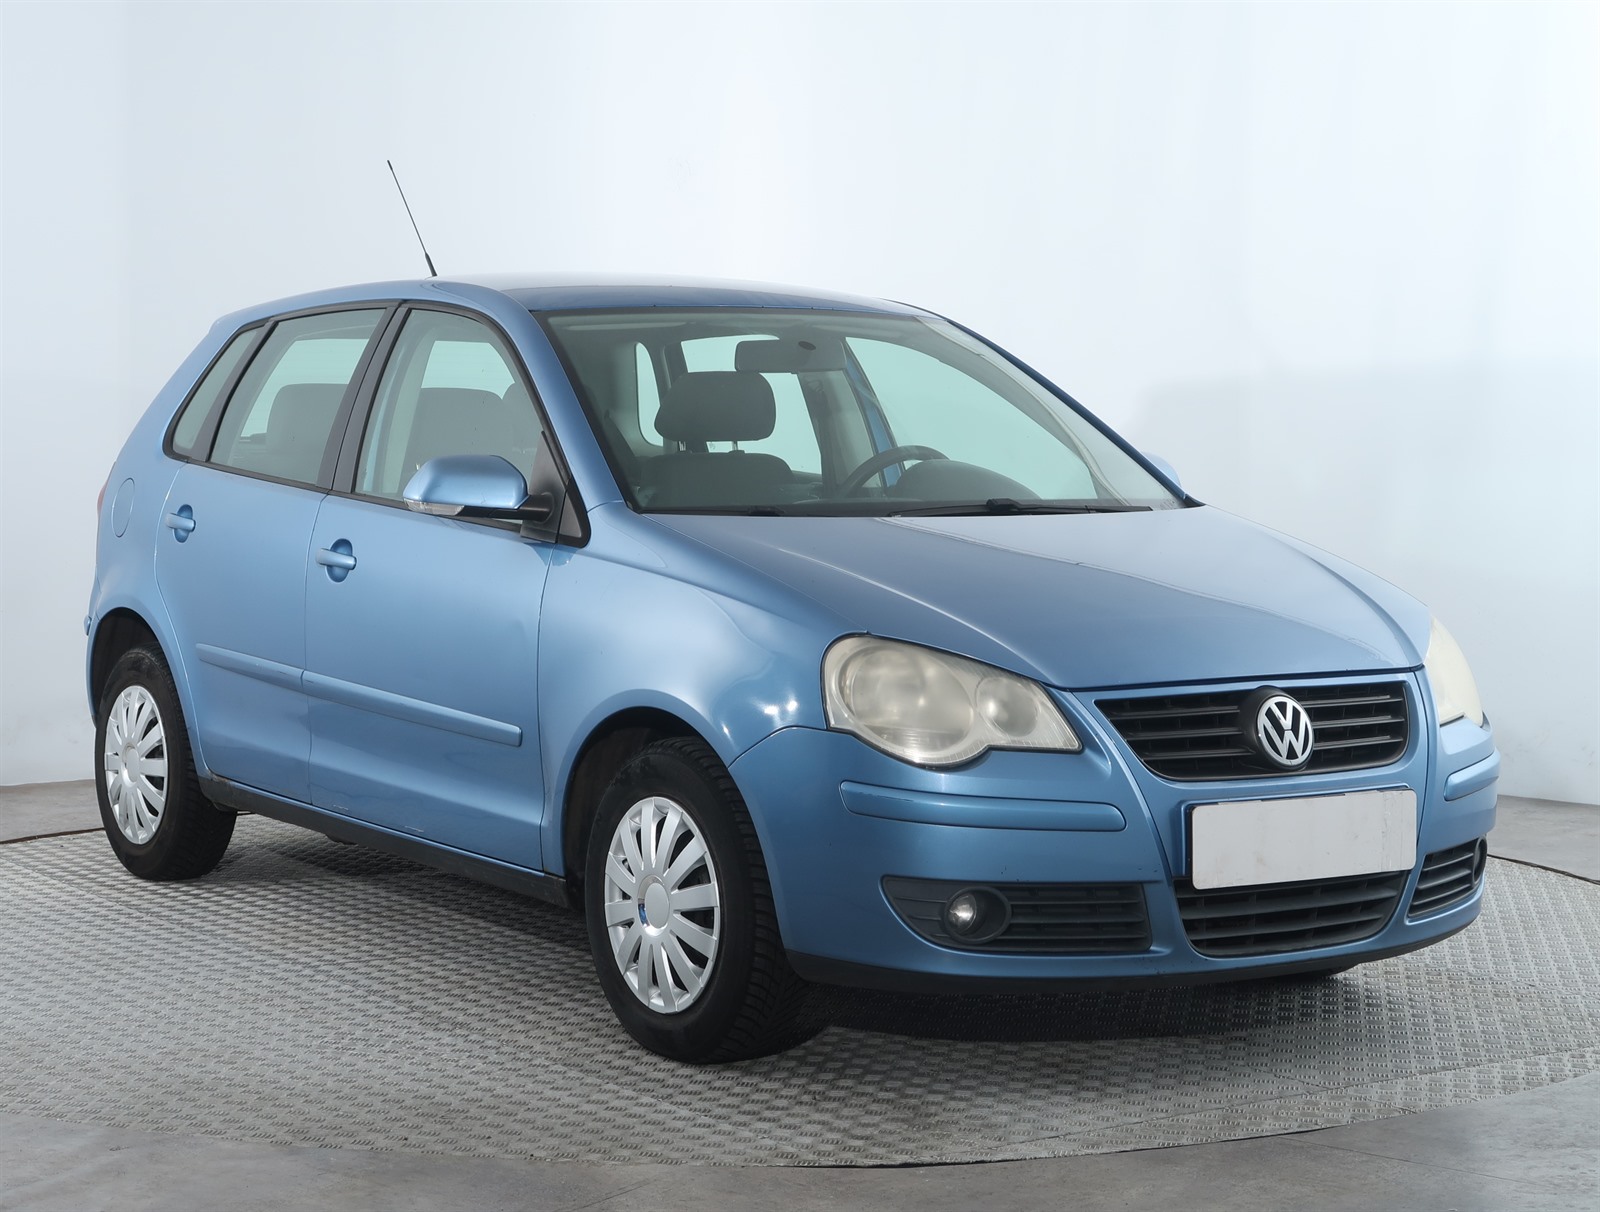 Volkswagen Polo, 2006 - celkový pohled